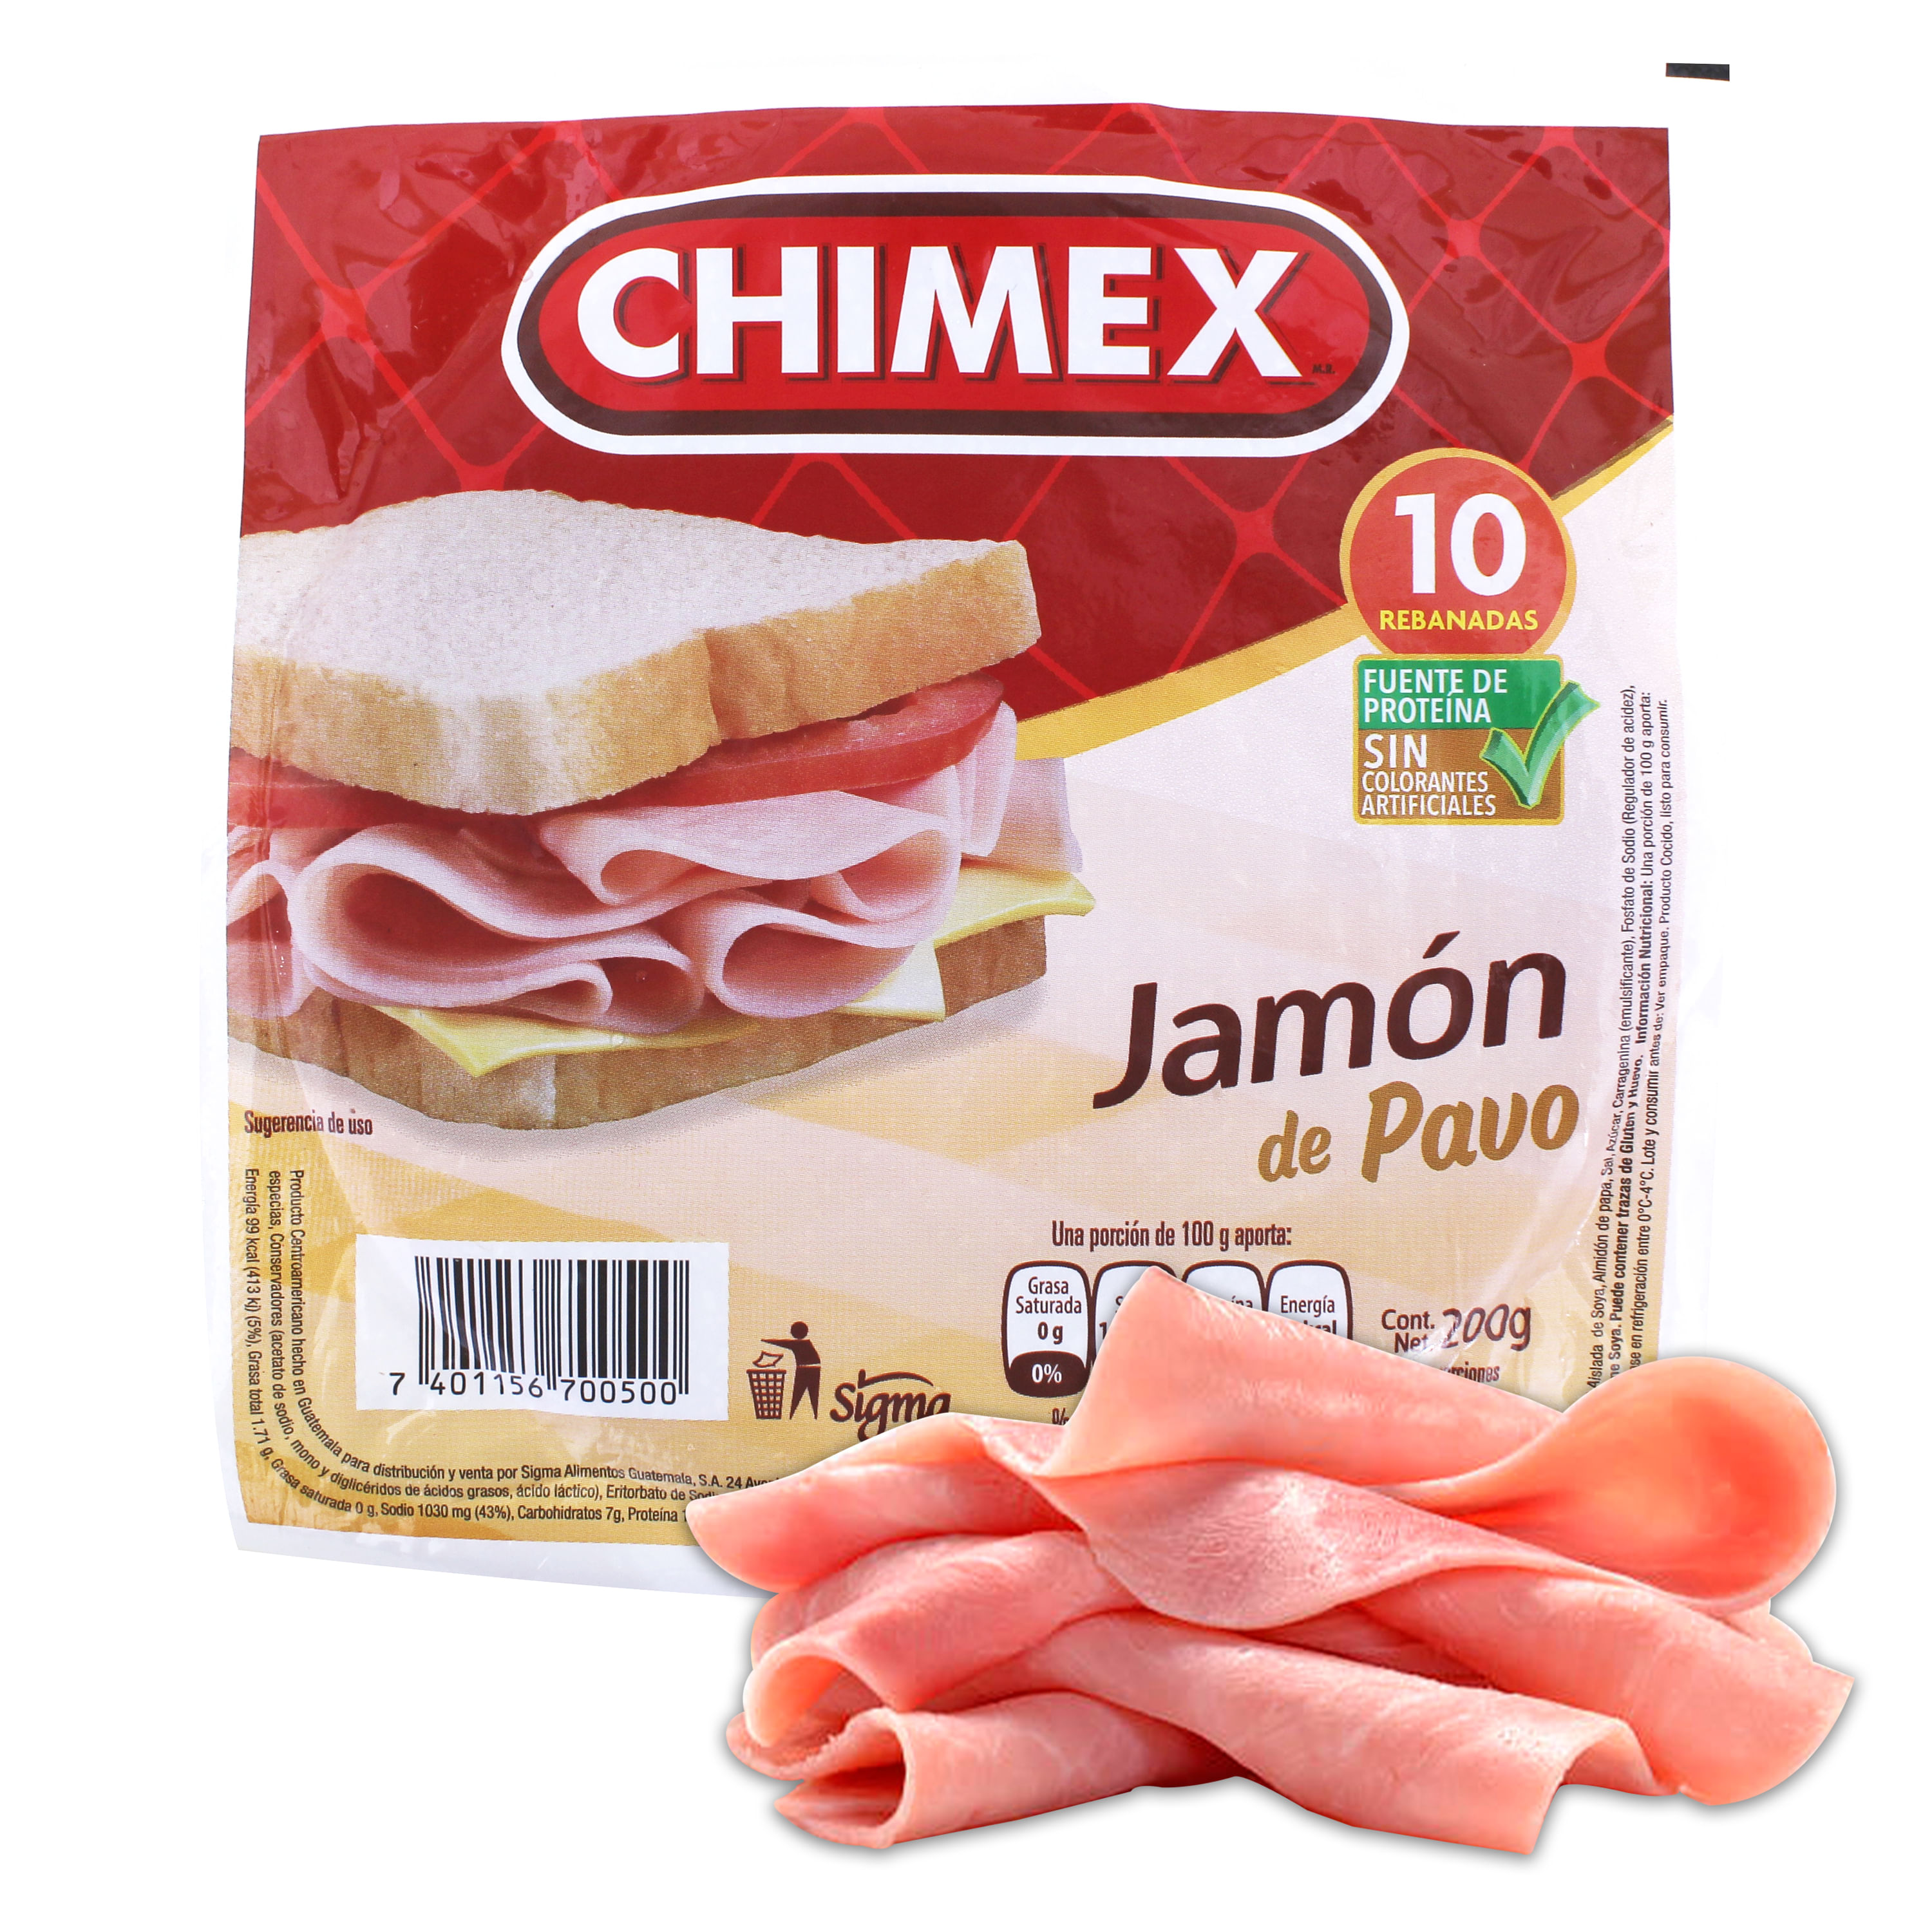 Jam-n-de-Pavo-Chimex-200gr-1-30507